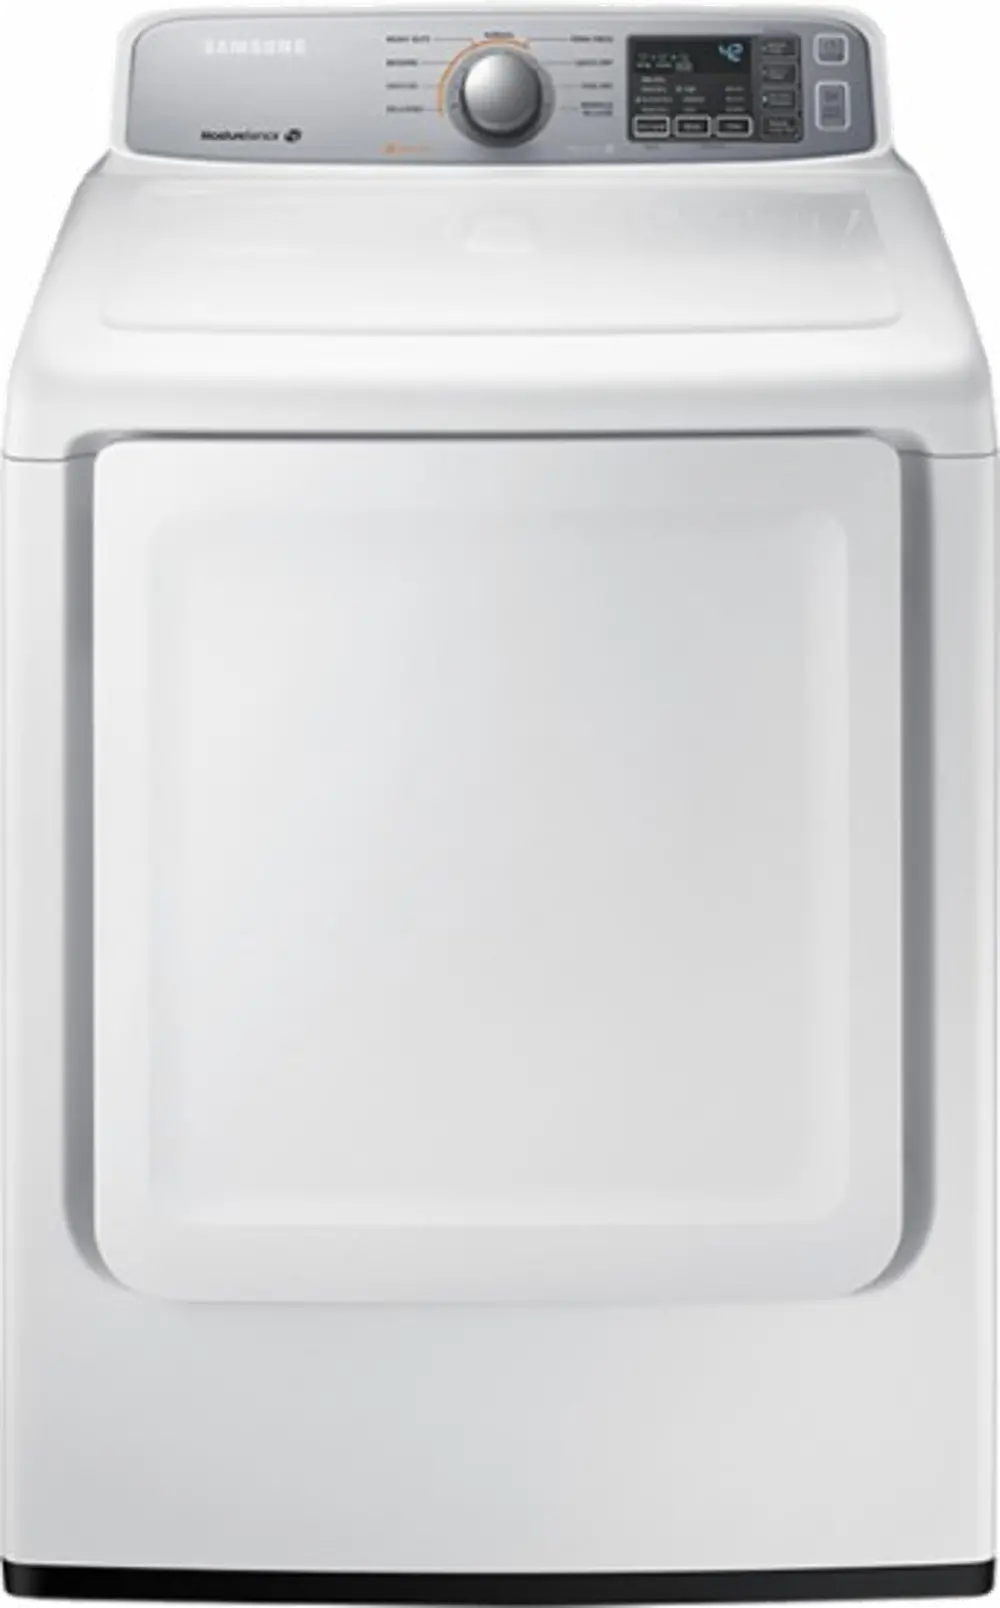 DV45K7100EW Samsung White 7.4 cu. ft. Electric Front Load Dryer-1